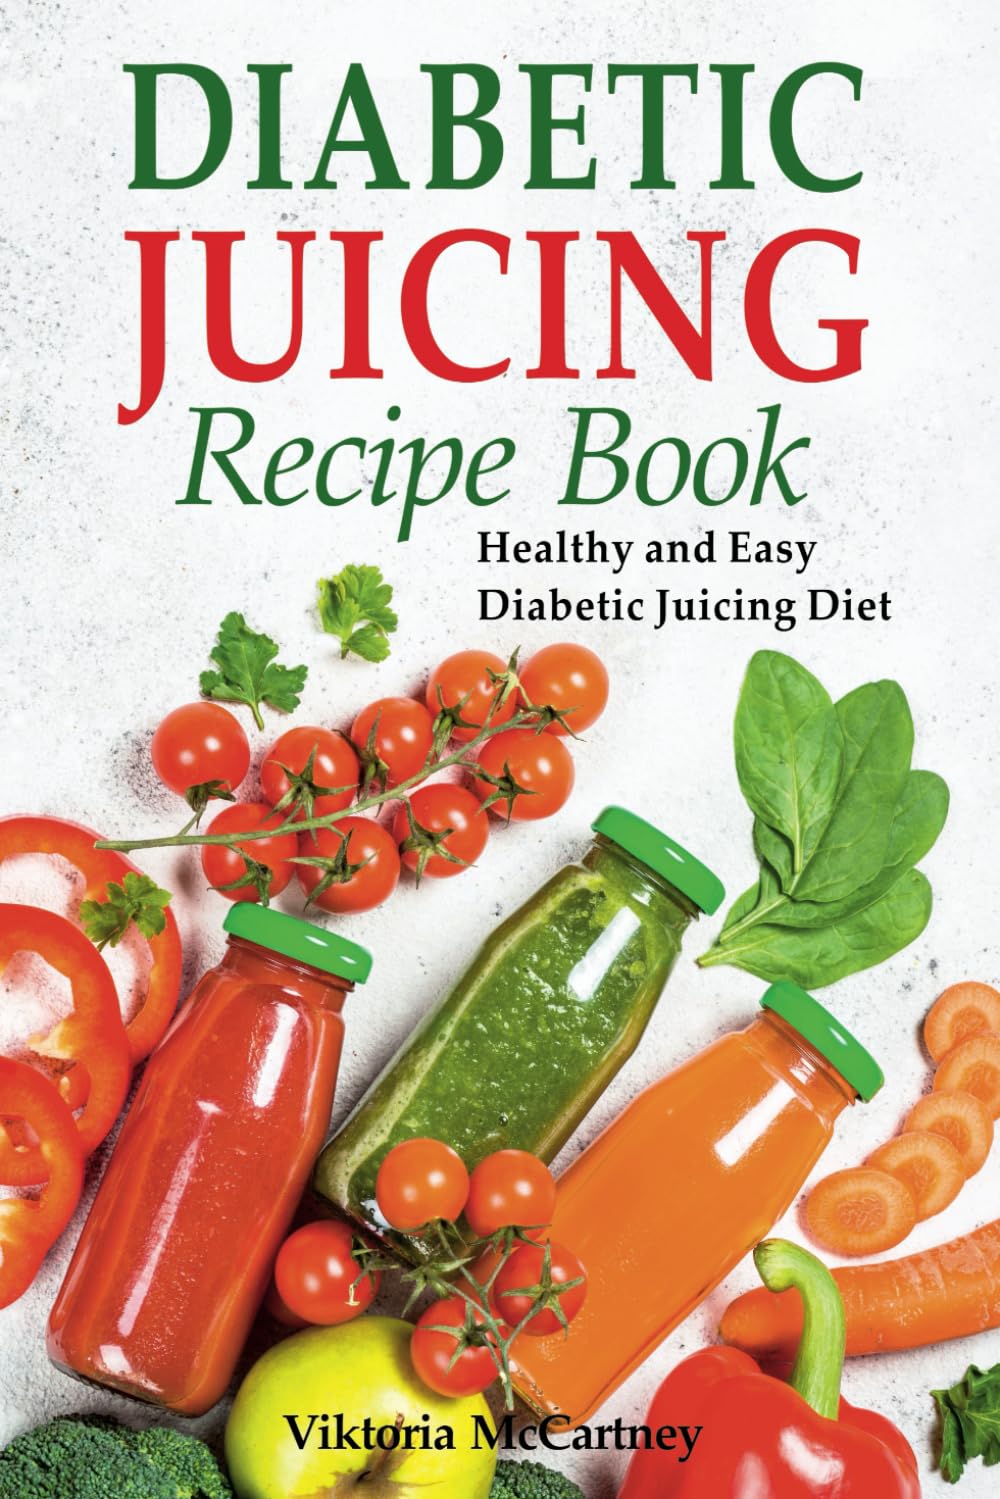 Diabetic Juicing Recipes Cookbook: Healthy and Easy Diabetic Juicing Diet.